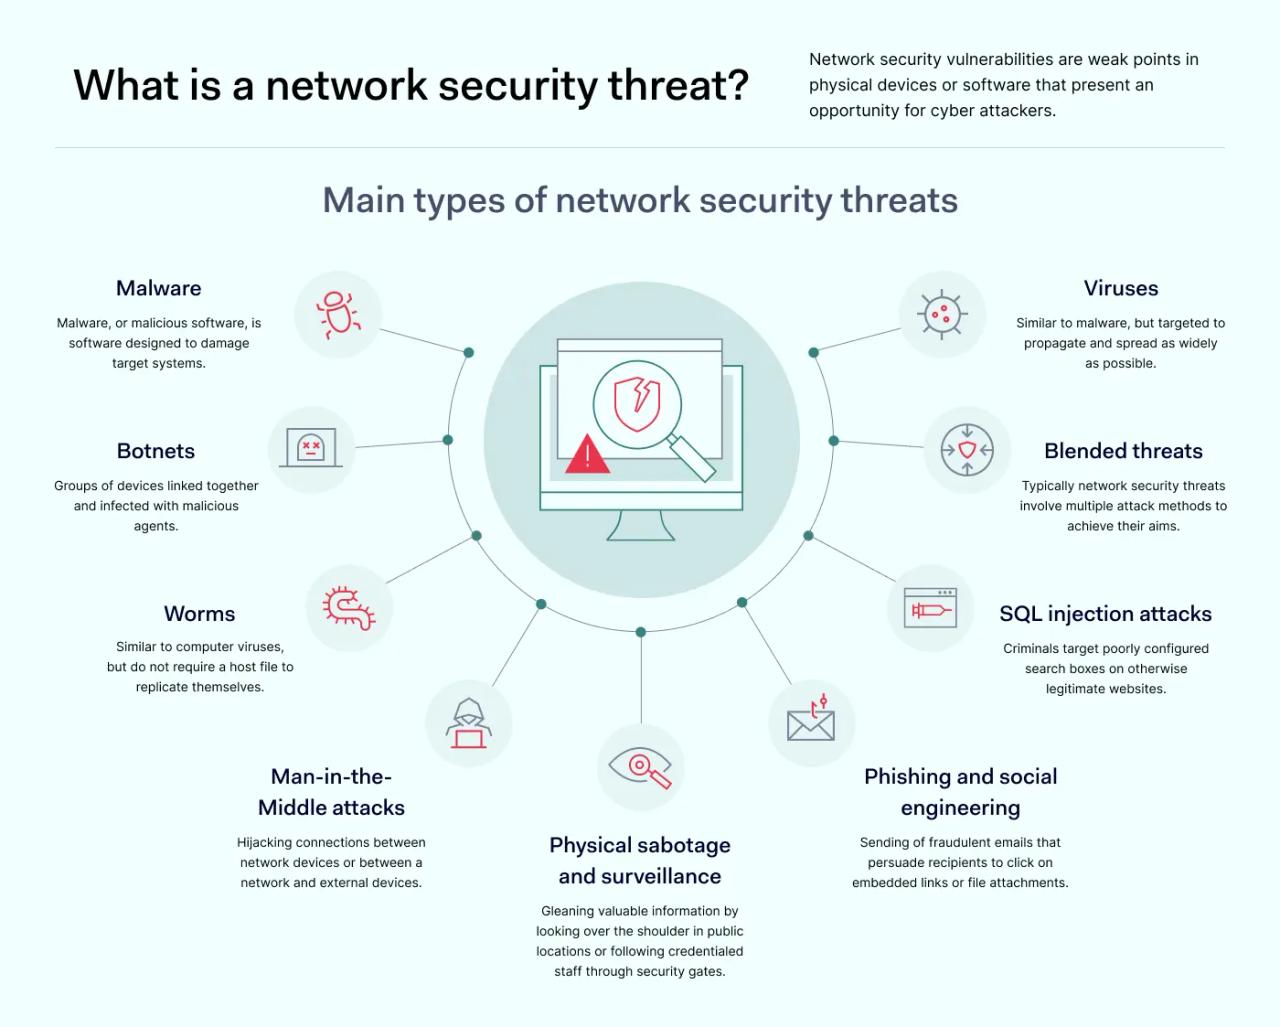 Main Network Security threats